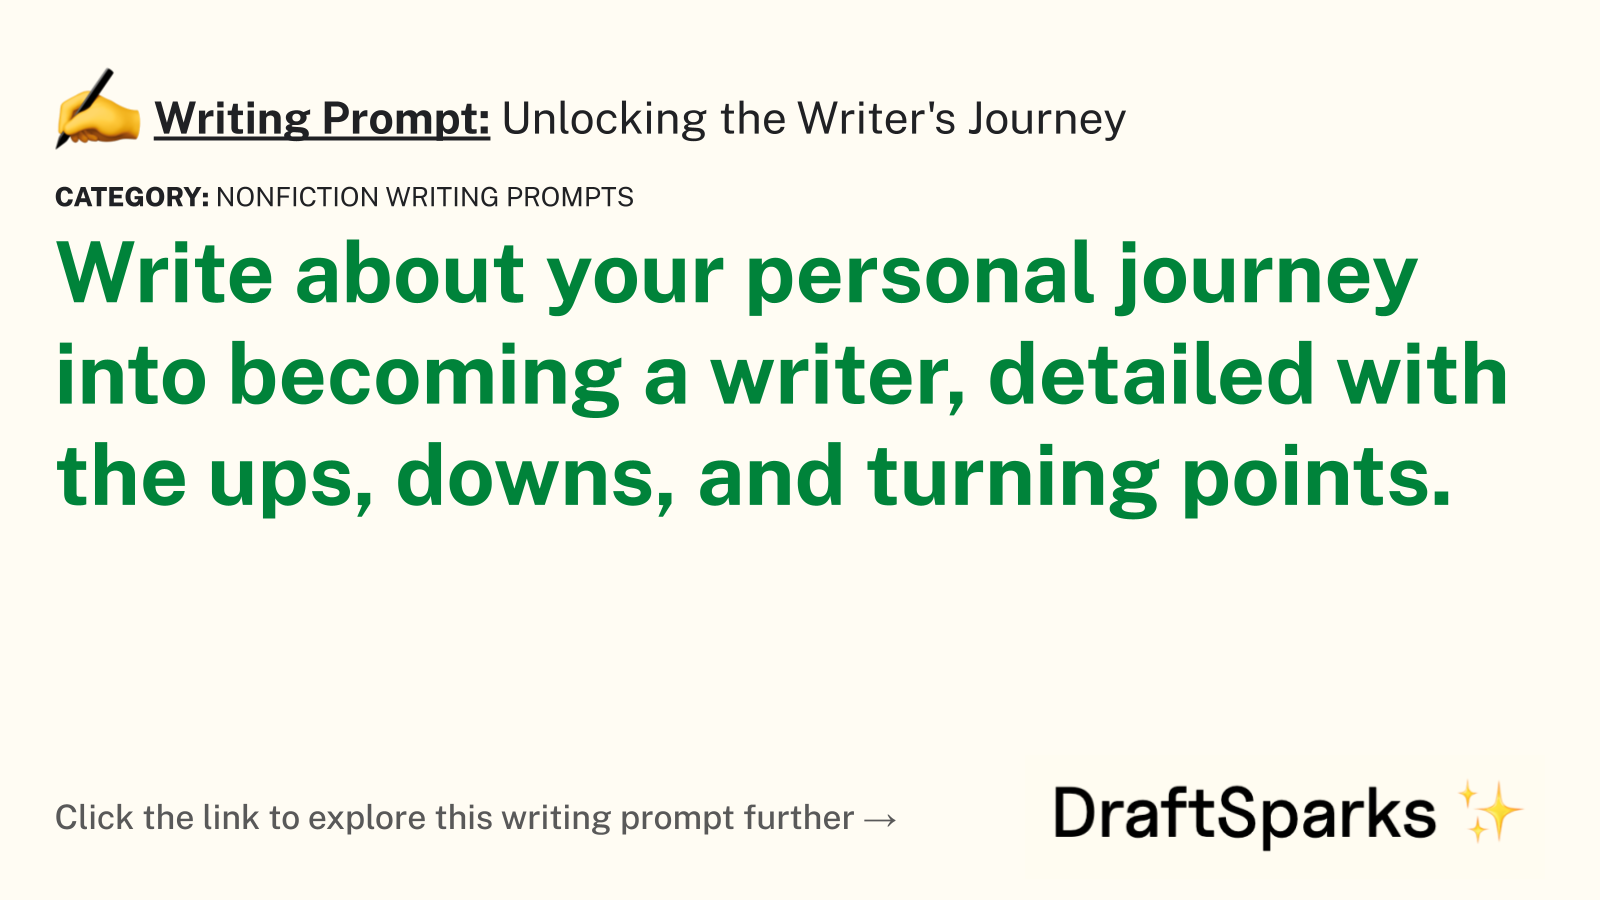 Unlocking the Writer’s Journey